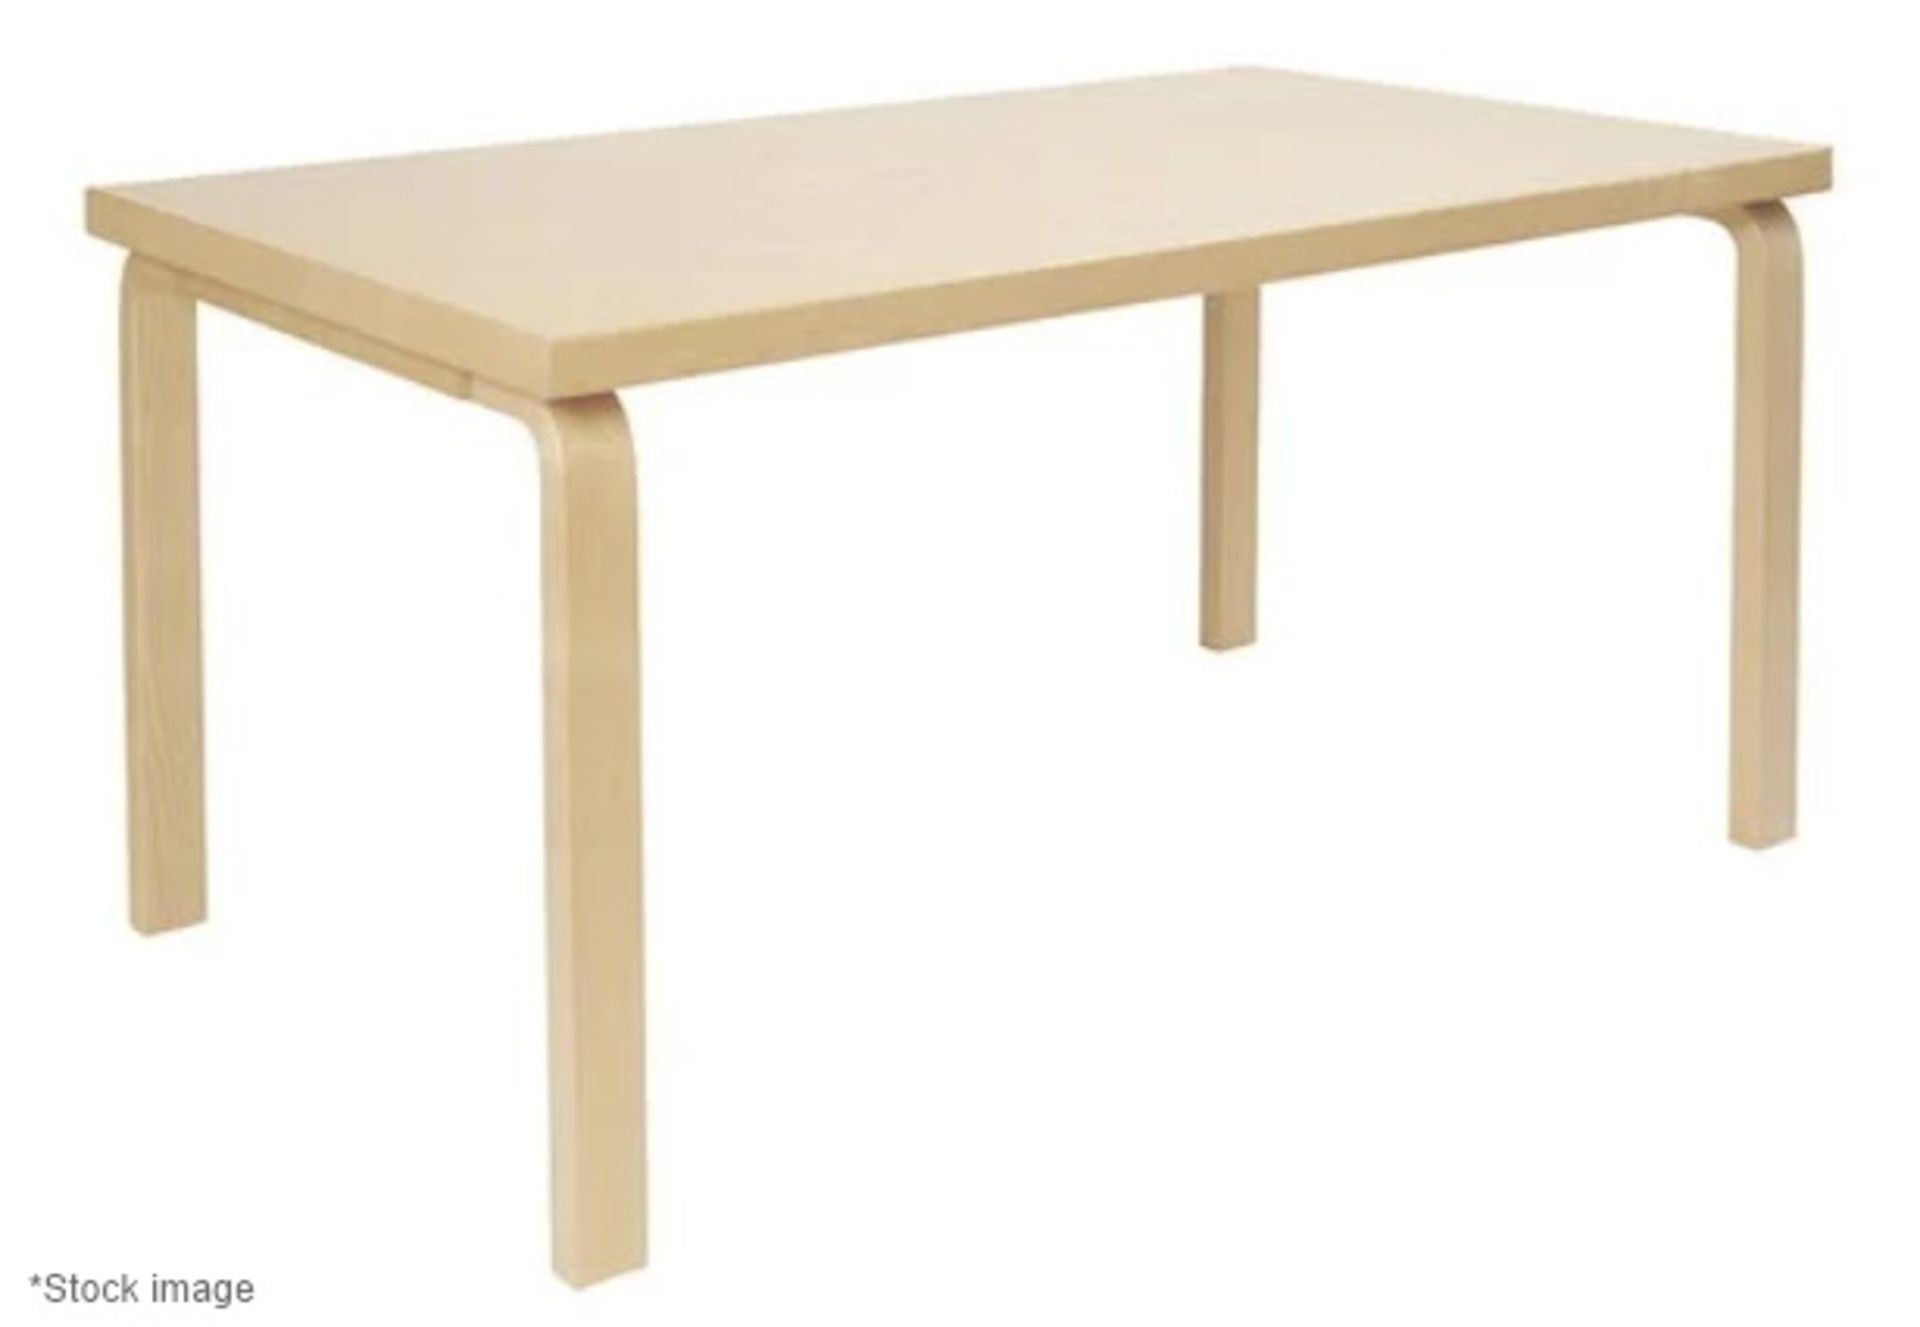 1 x VITRA / ARTEK 'Aalto 82A' Designer Table, In Birch - Original Price £979.00 - Image 3 of 4